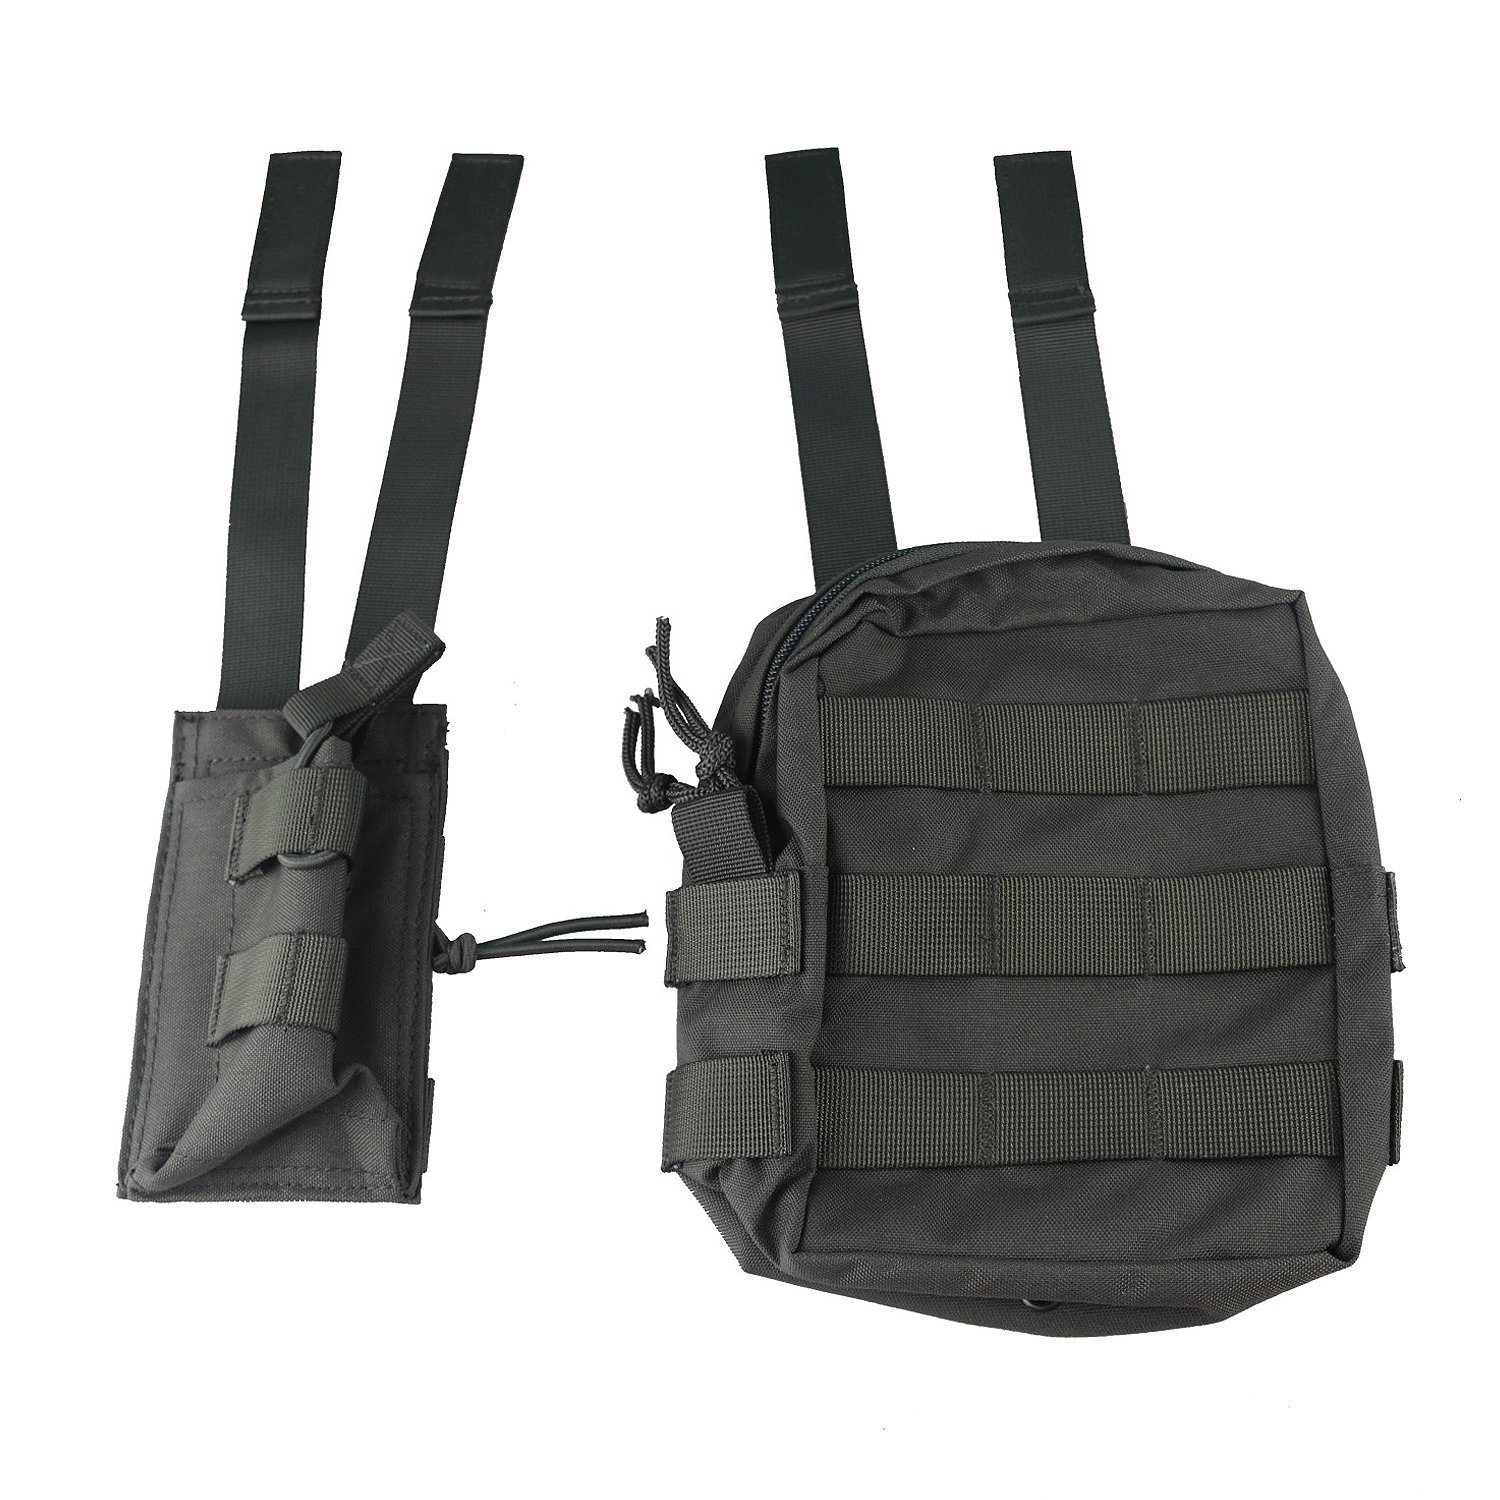 Wholesale Camo 600d Upgrade Bulletproof Military Vest Tactical Plate Carrier